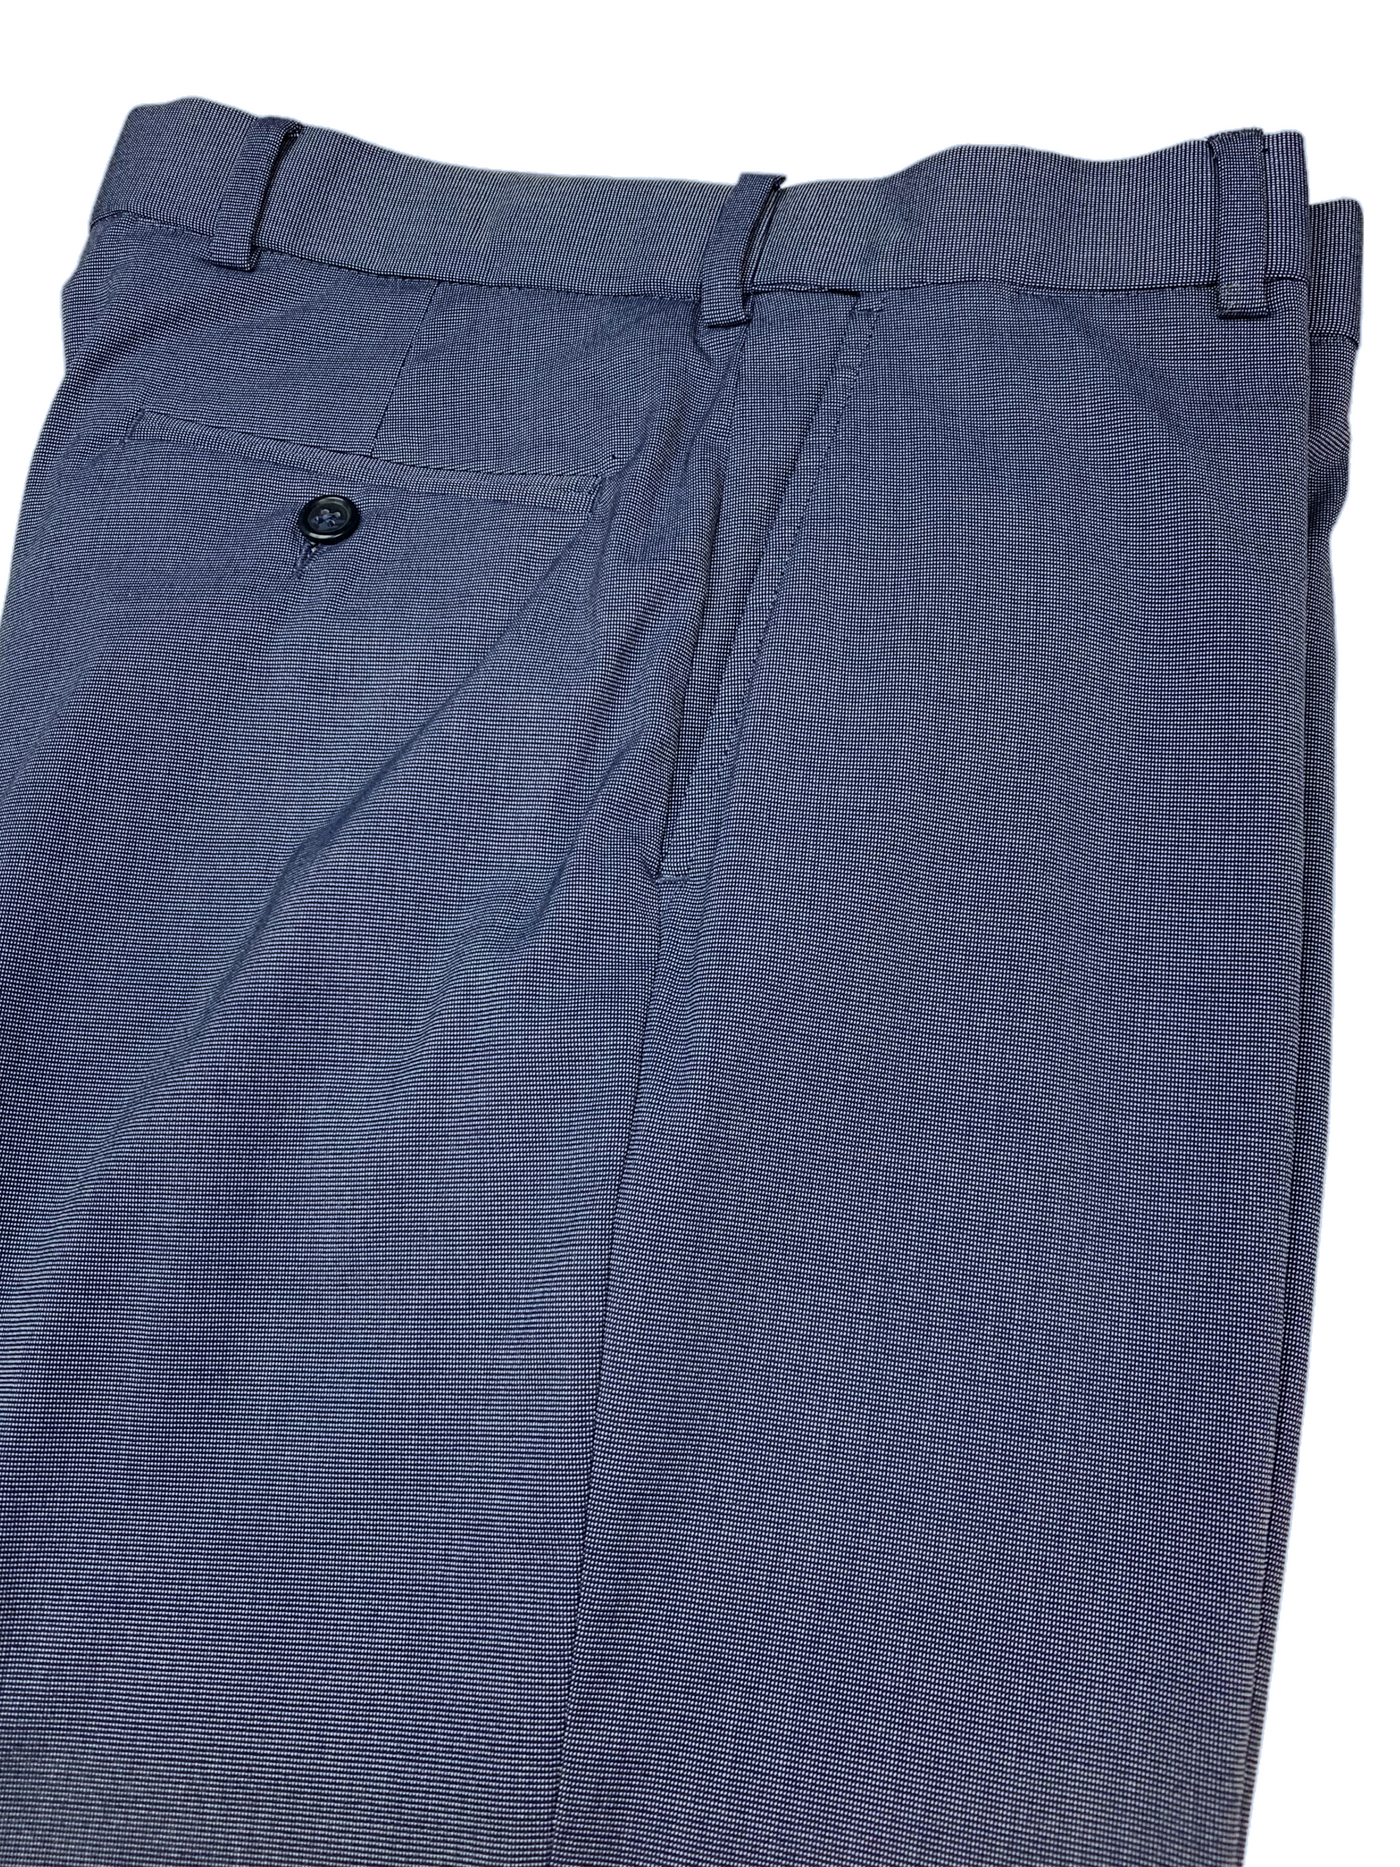 Pantalon habillé bleu micro pois Barris